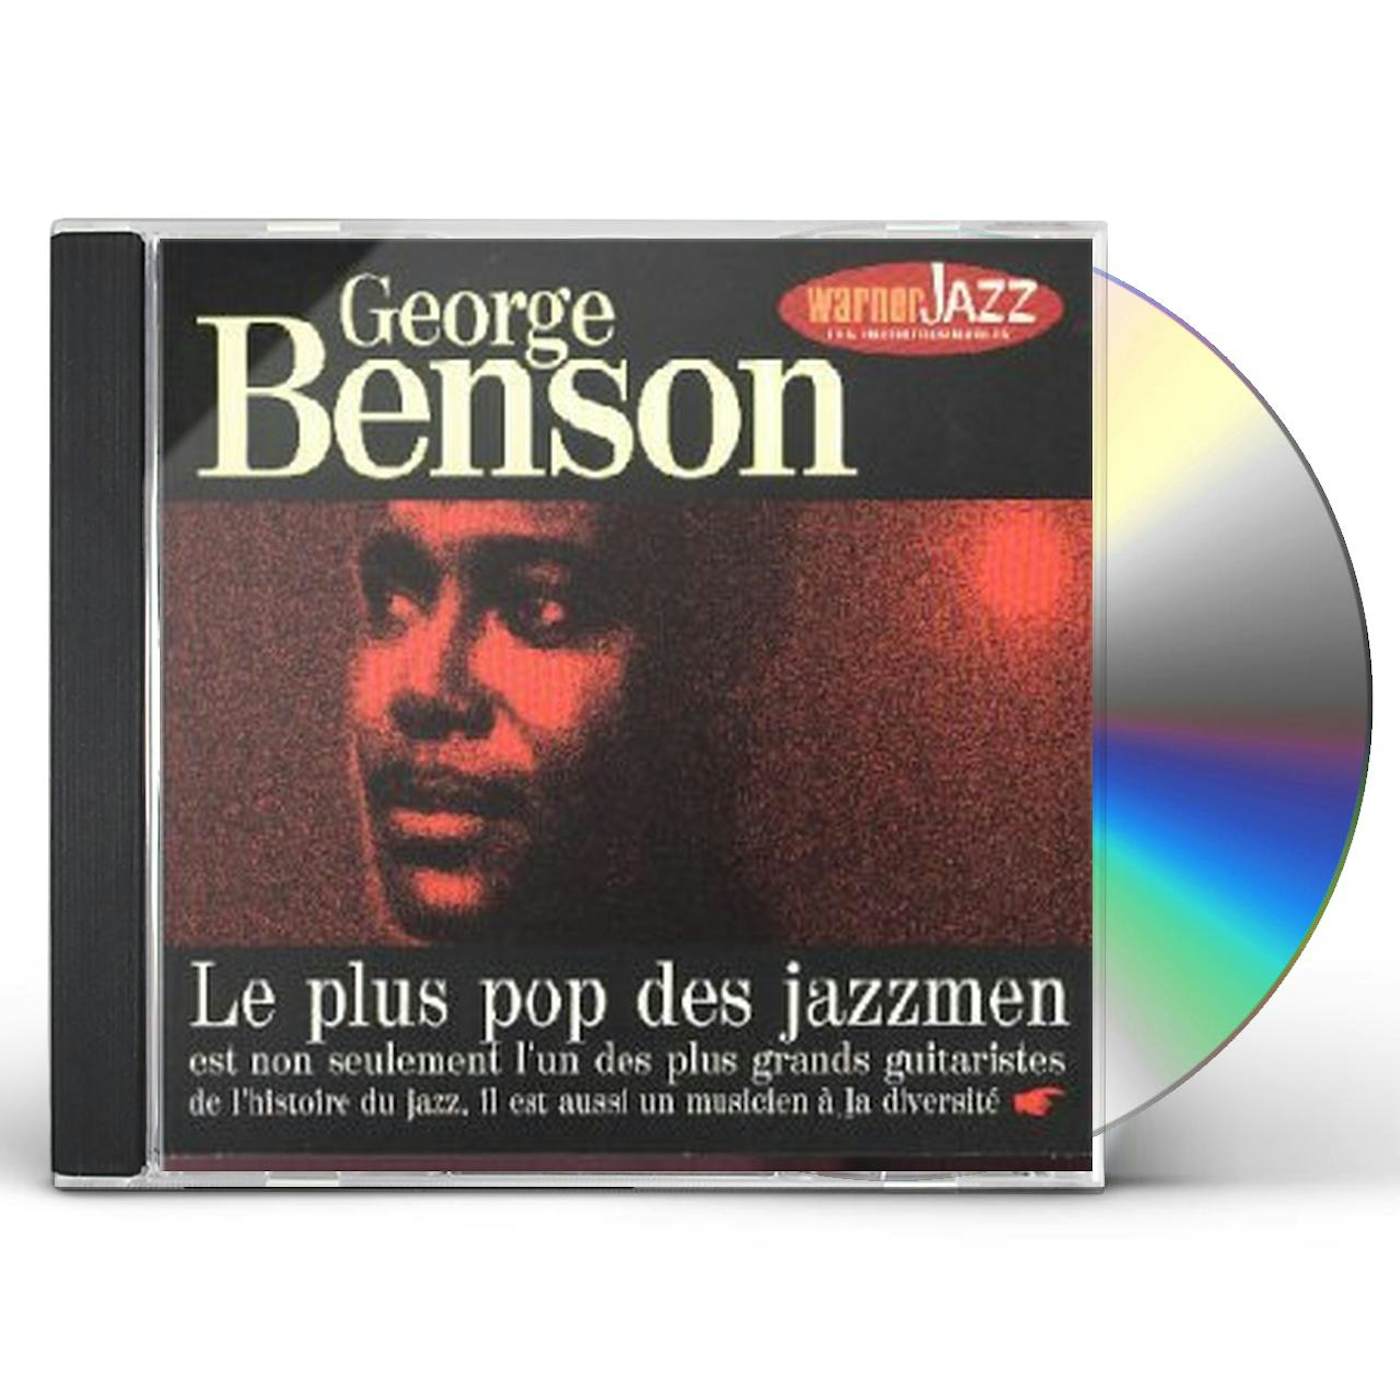 George Benson INCONTOURNABLES CD